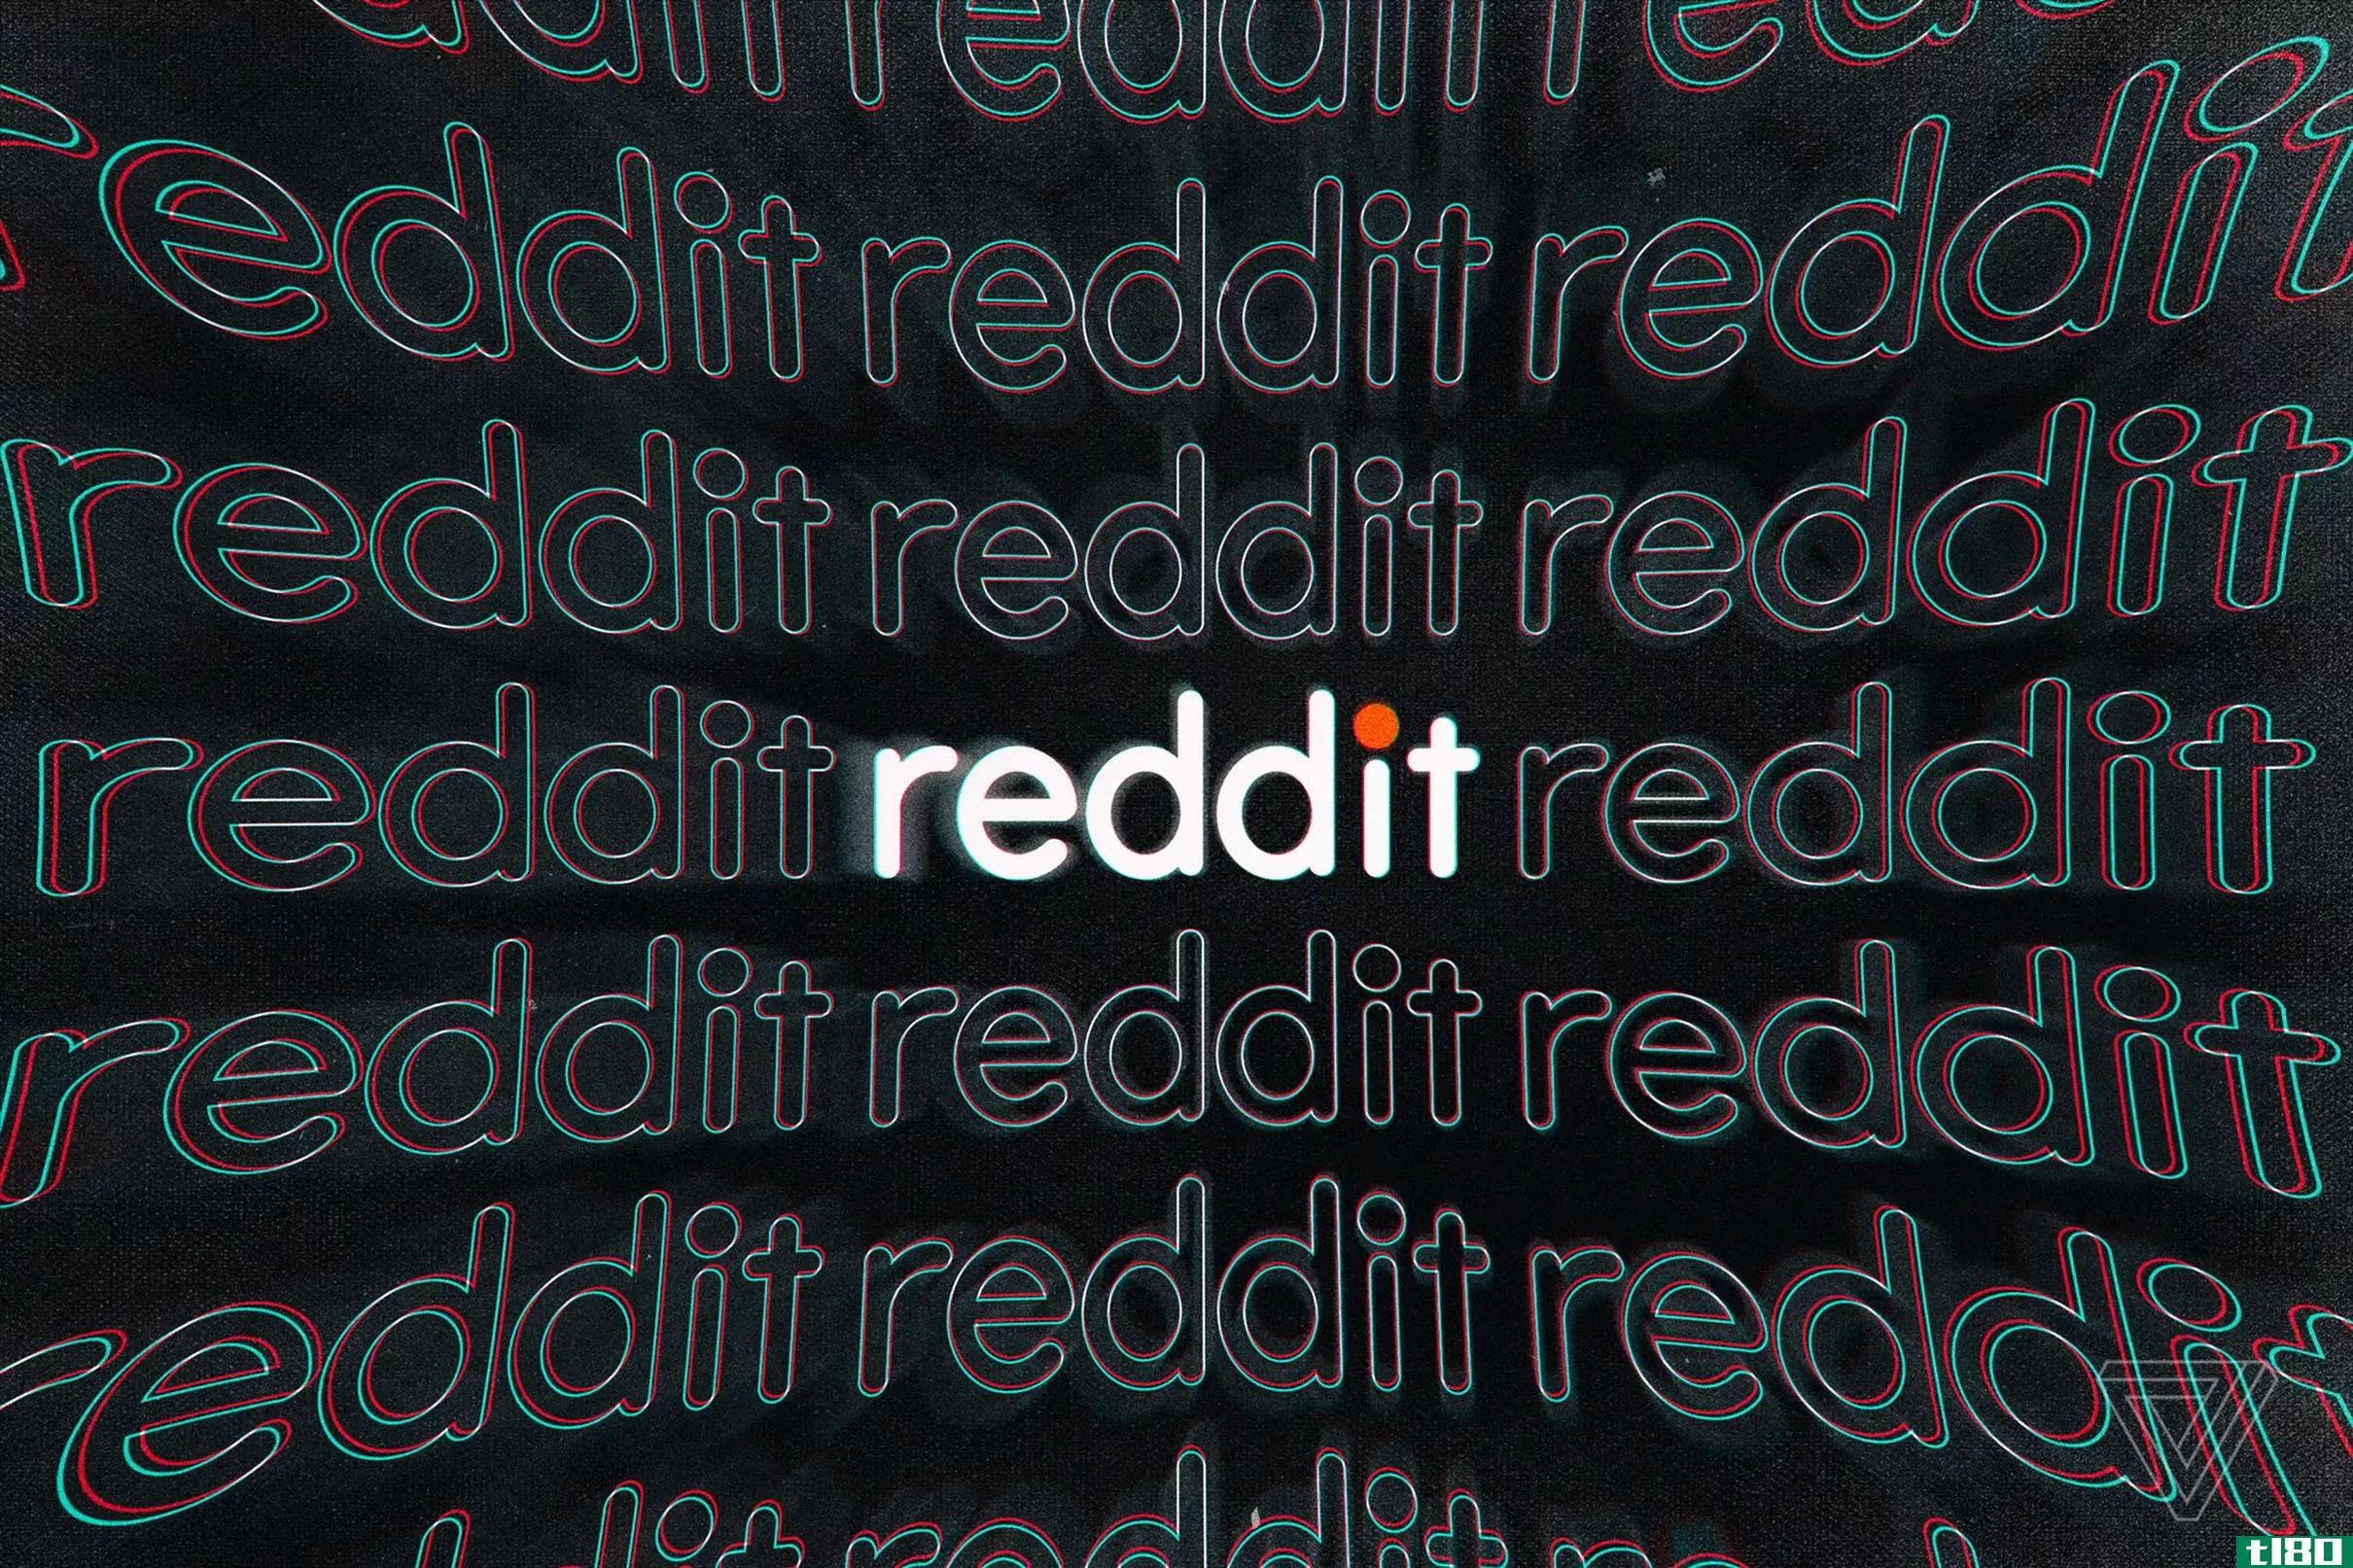 reddit已经准备好让它的小型直播服务变得更大